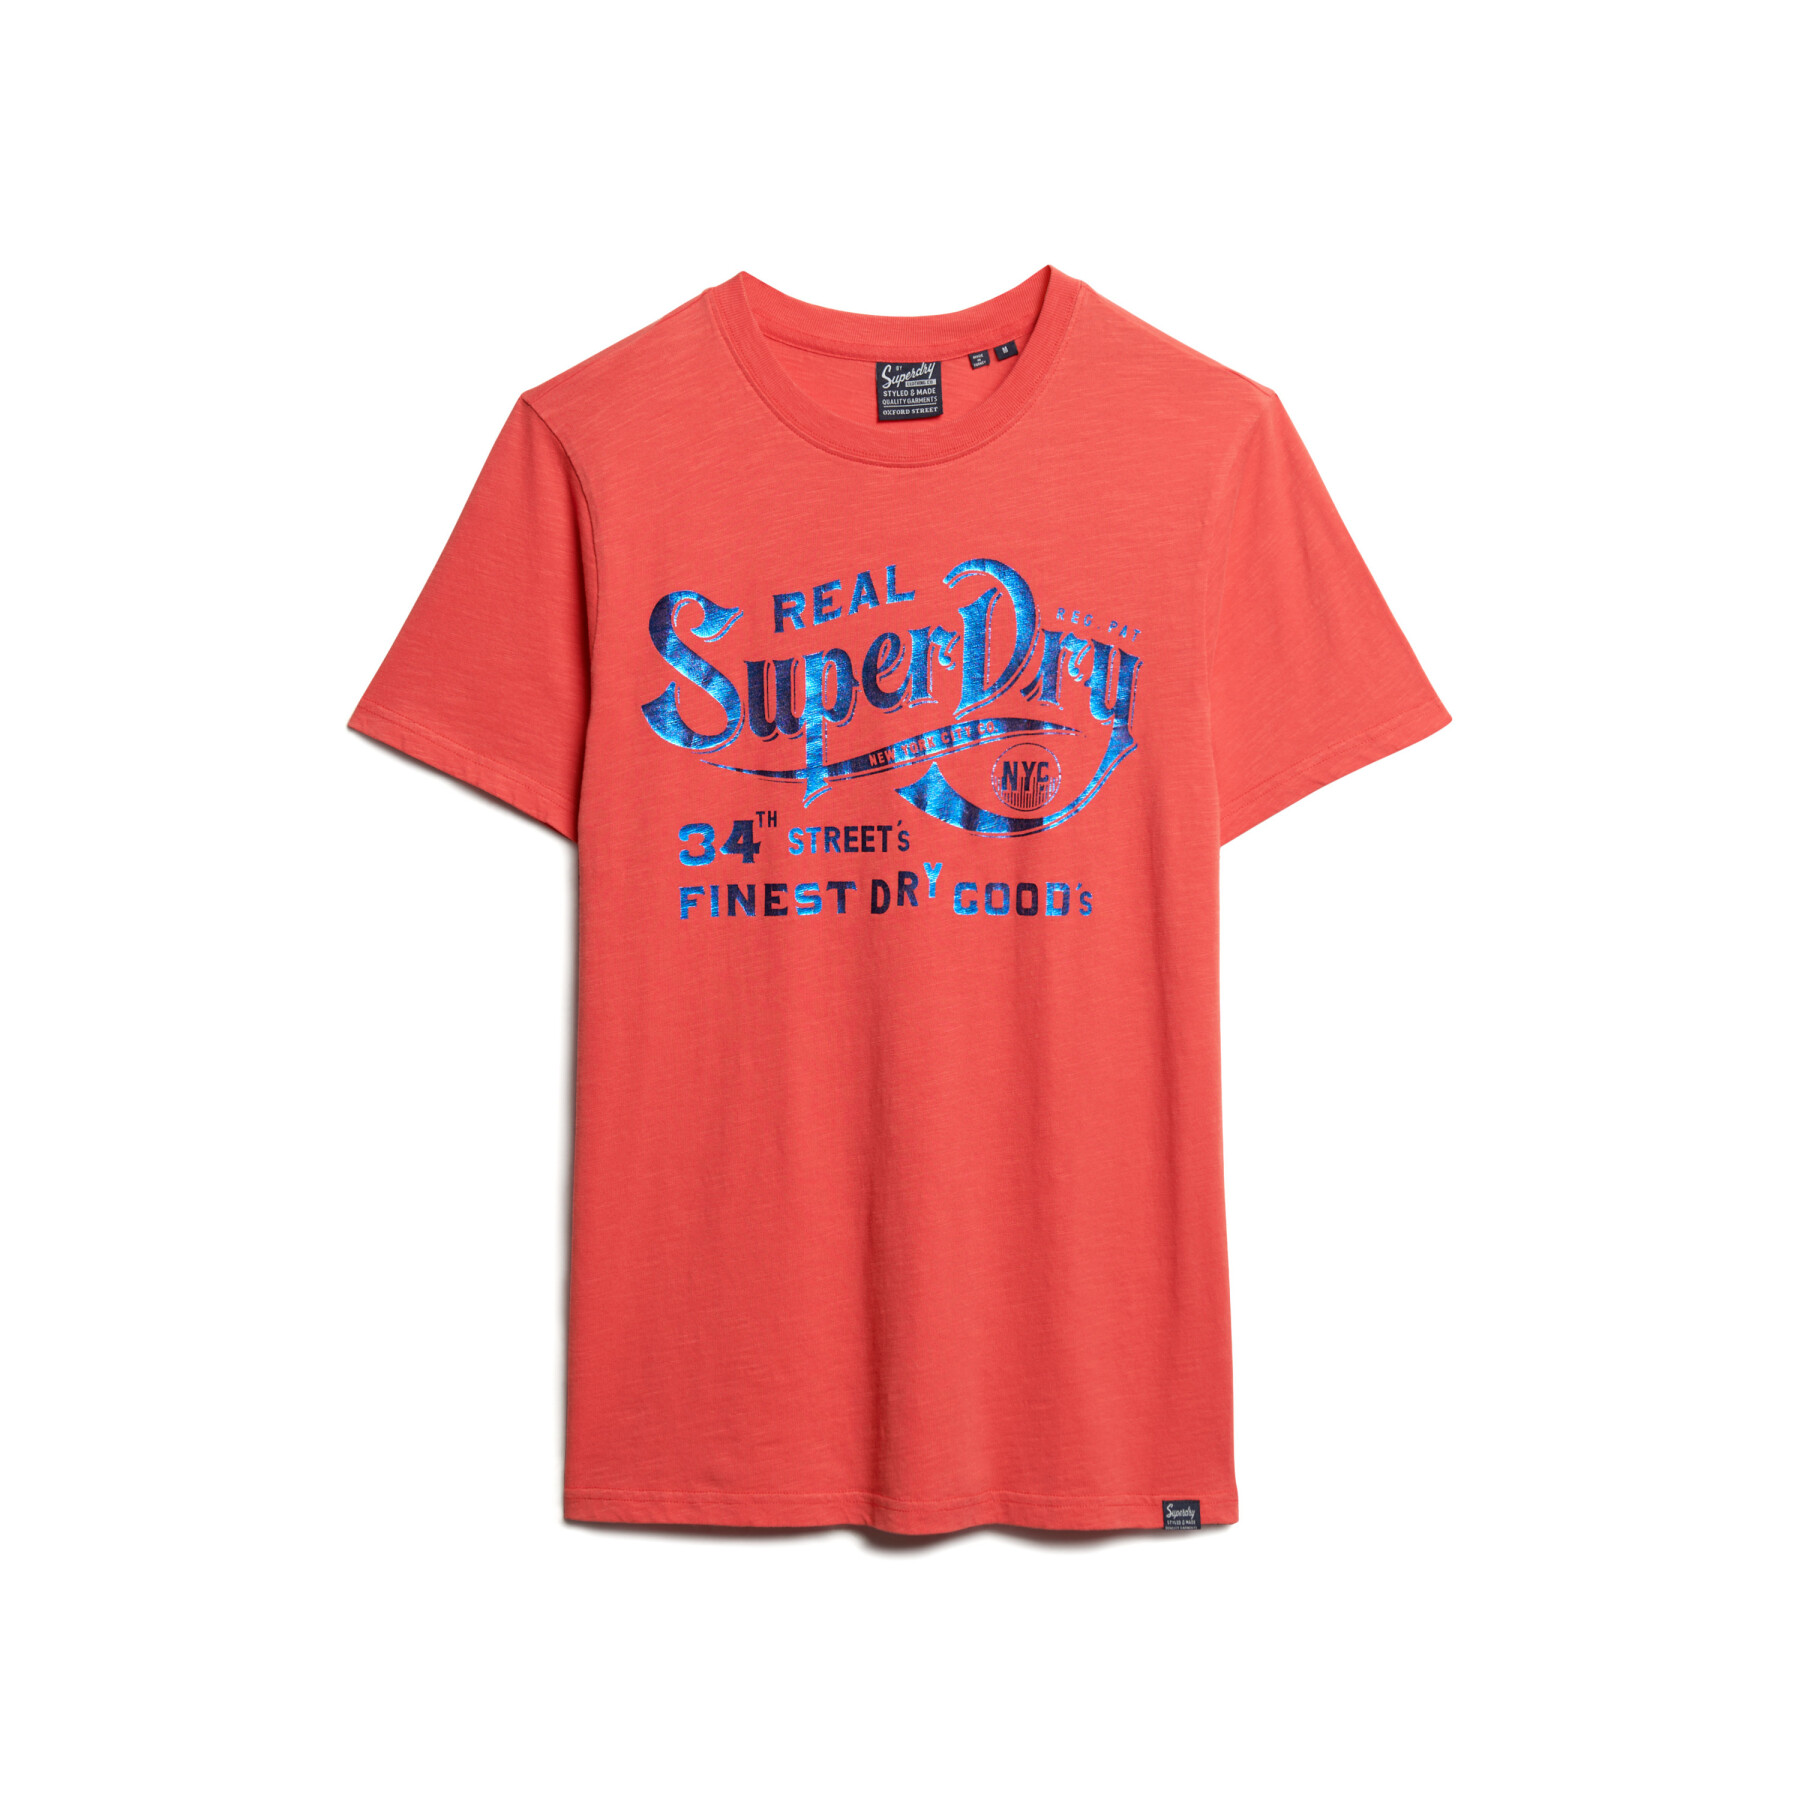 T-shirt Superdry Workwear